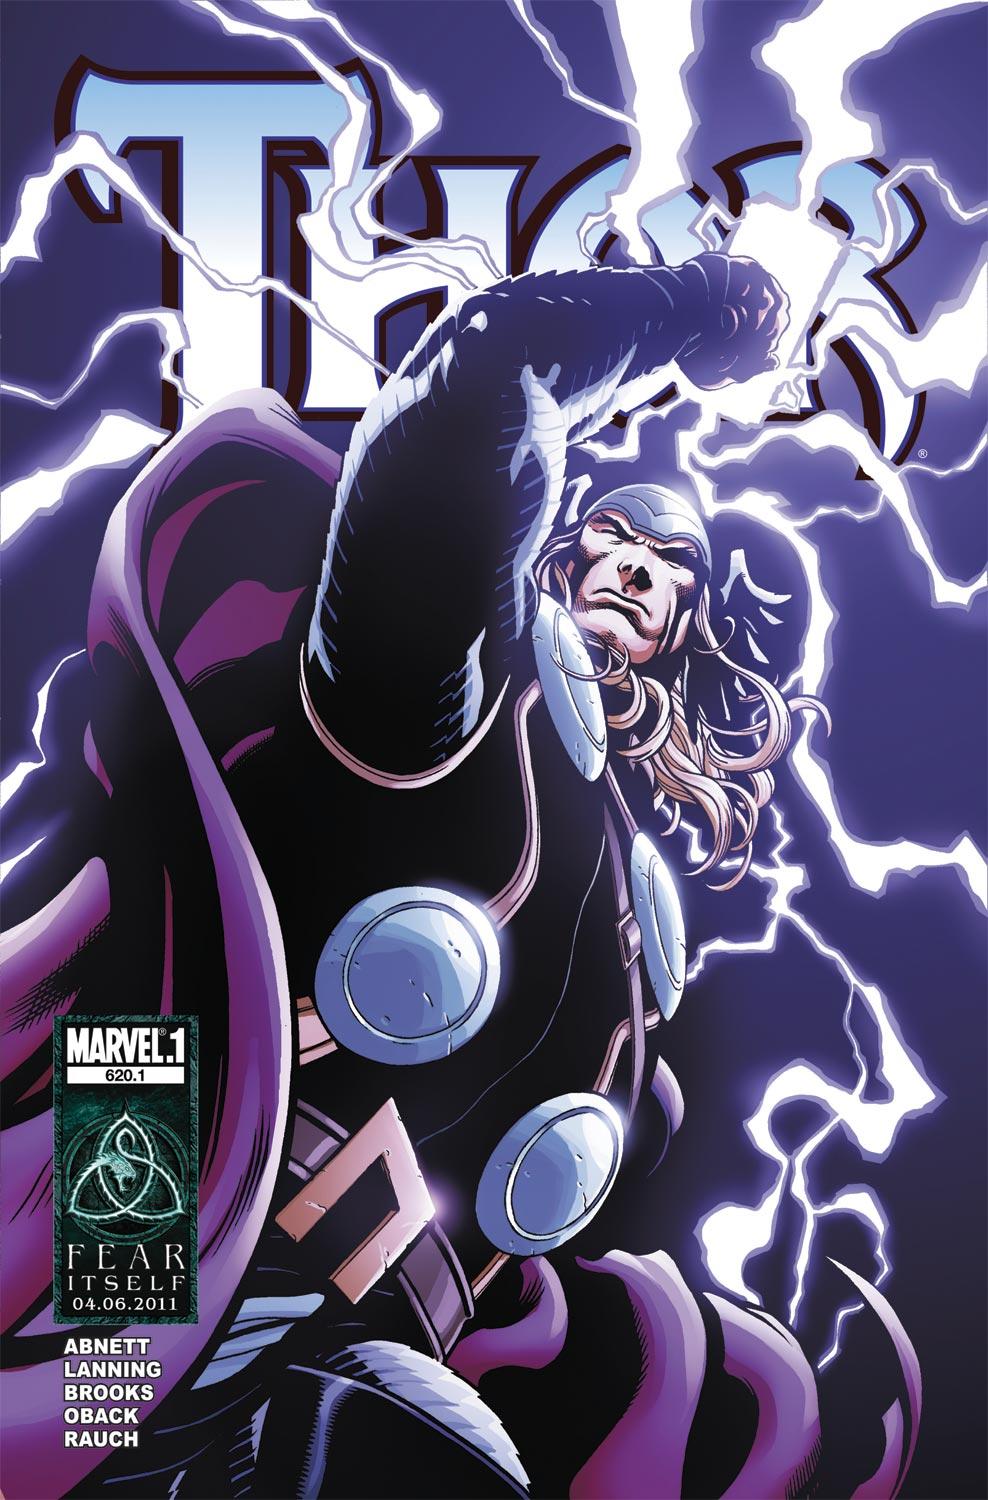 Thor (2007) #620.1